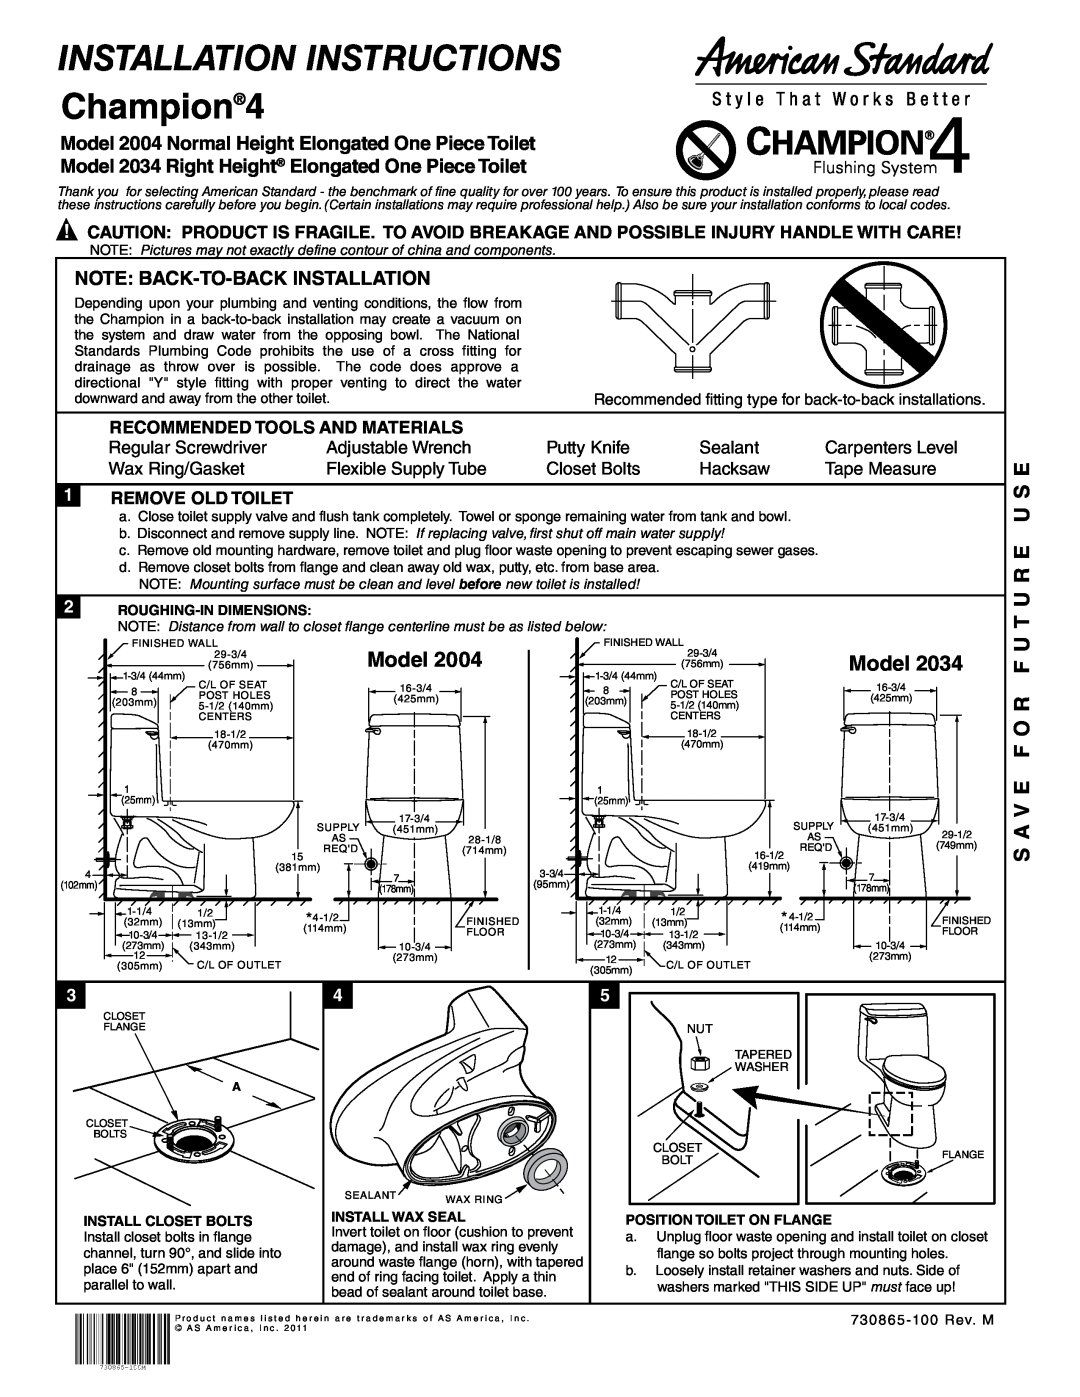 American Standard 2034 installation instructions T U R E U S E, 29-3/4Model, S A V E F O R F U, Installation Instructions 